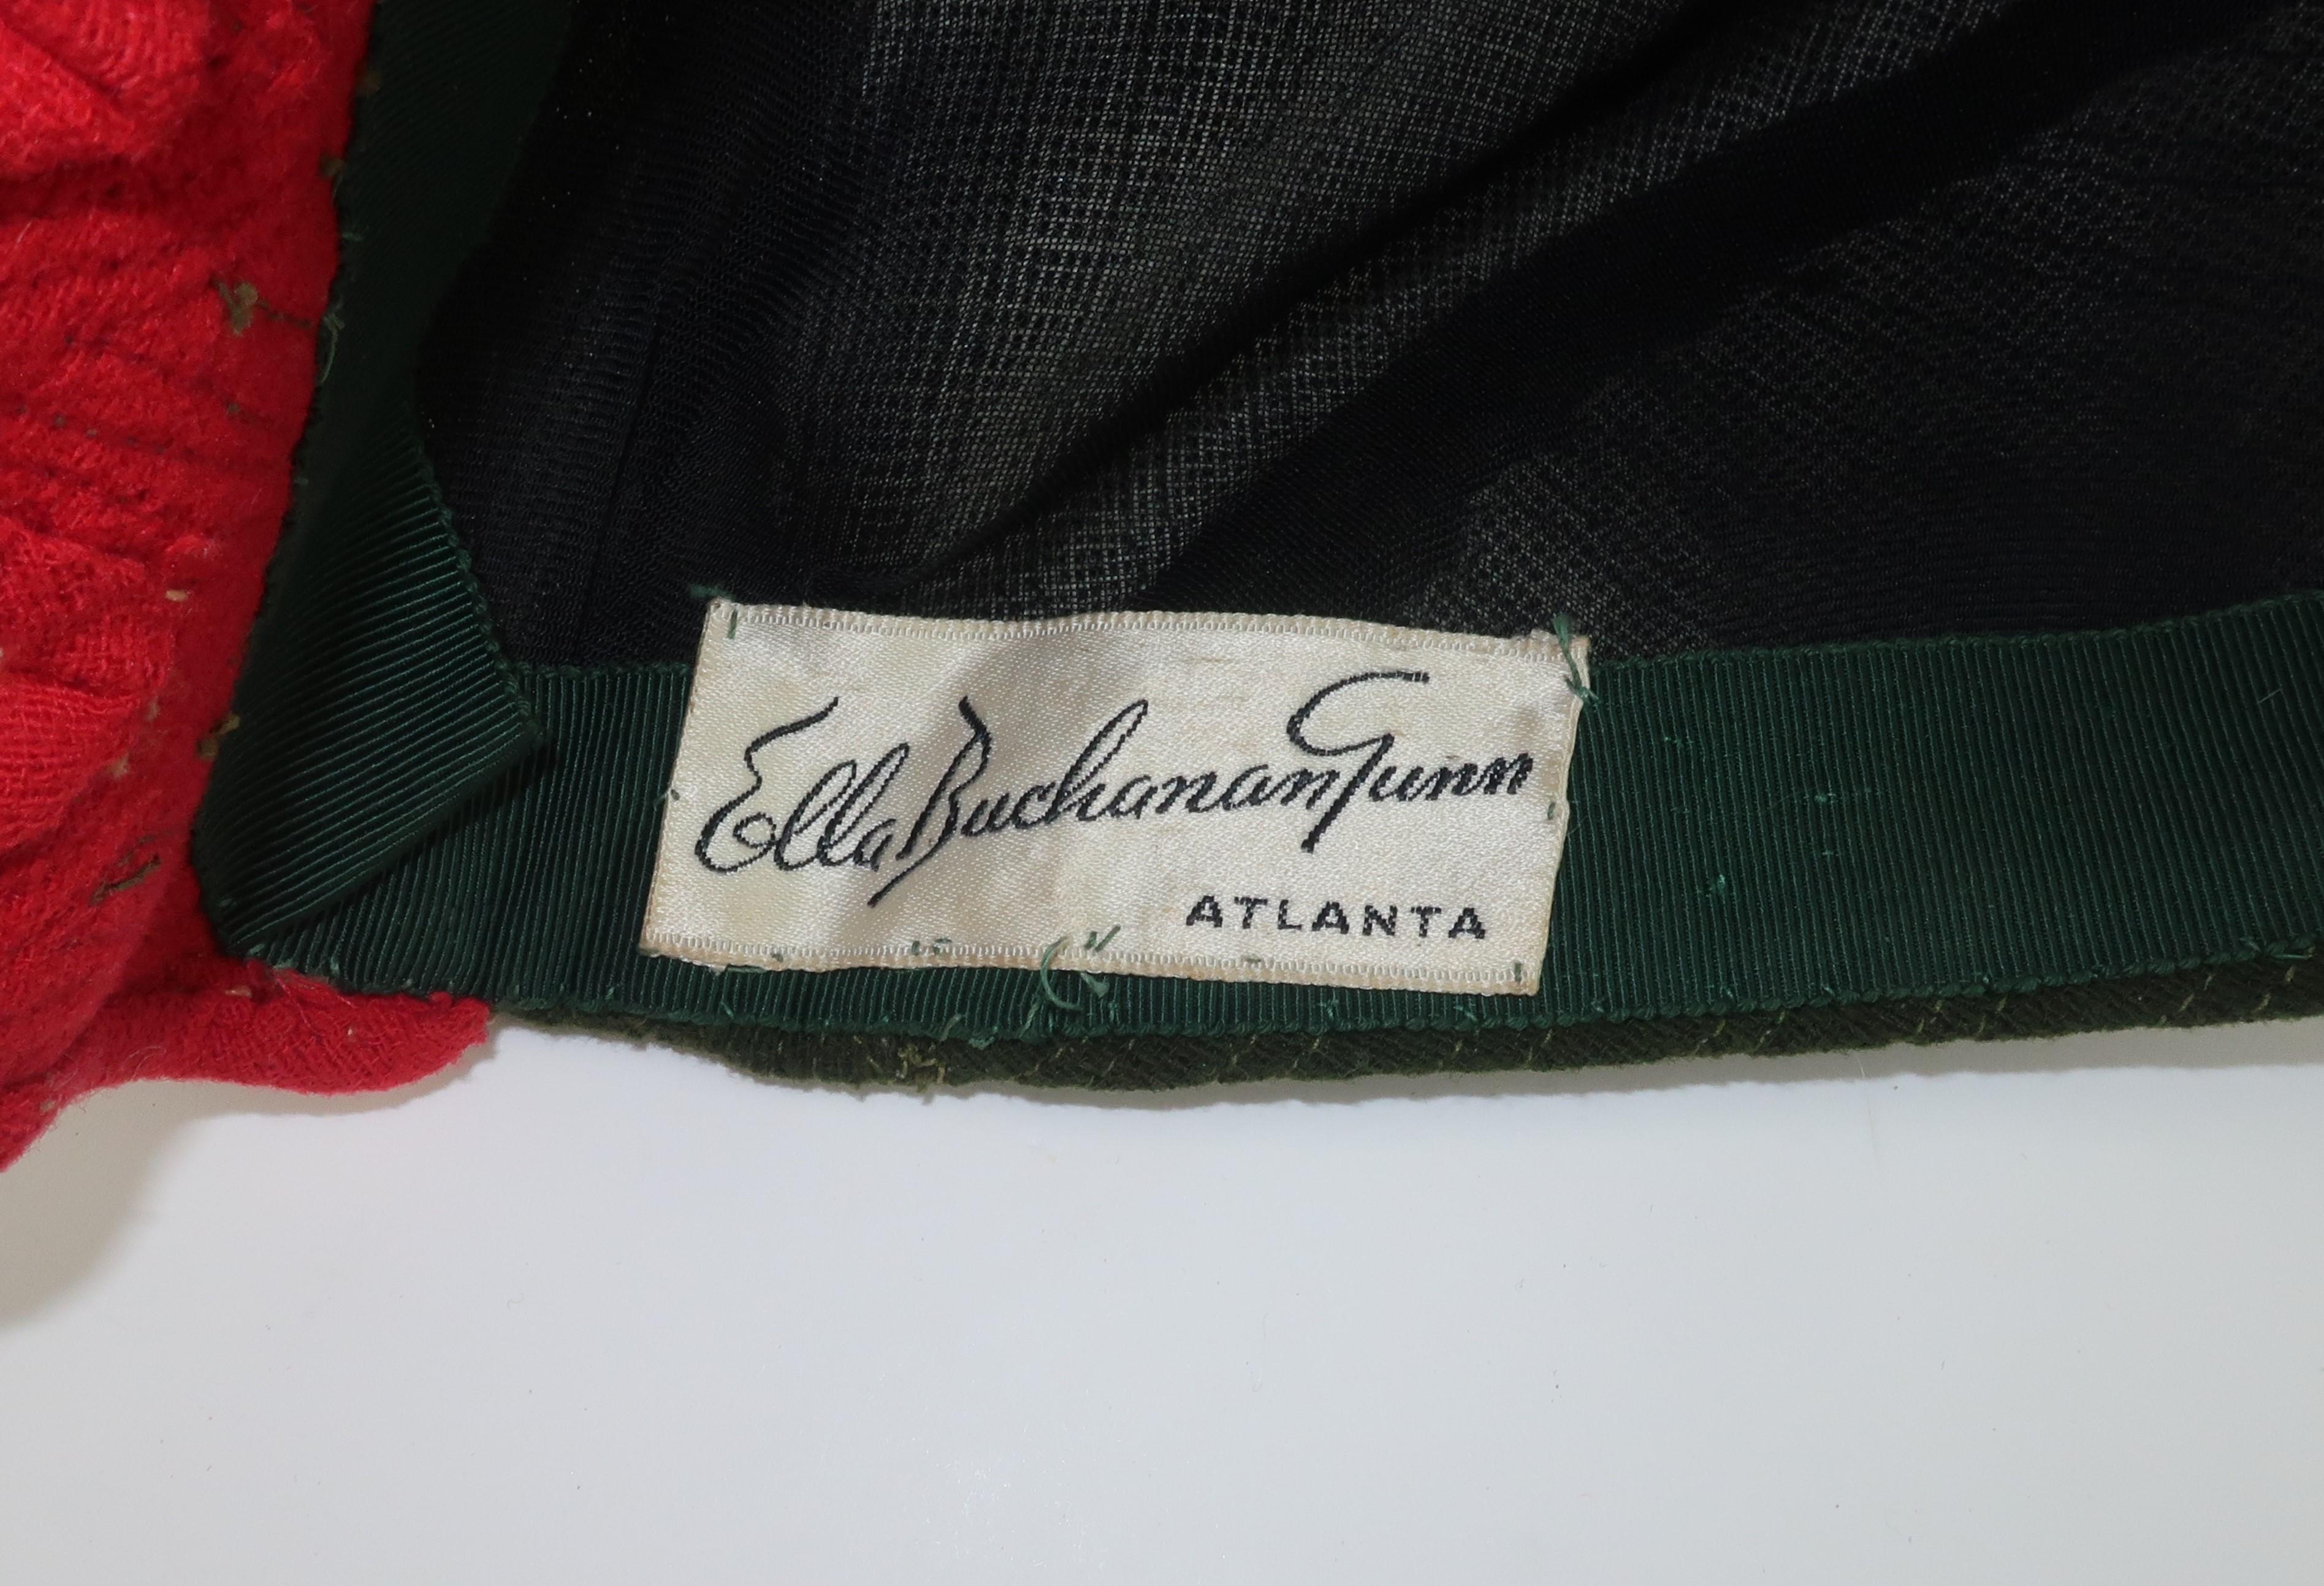 Ella Buchanan Gunn Army Green & Red Wool Cap Hat, 1940's 4